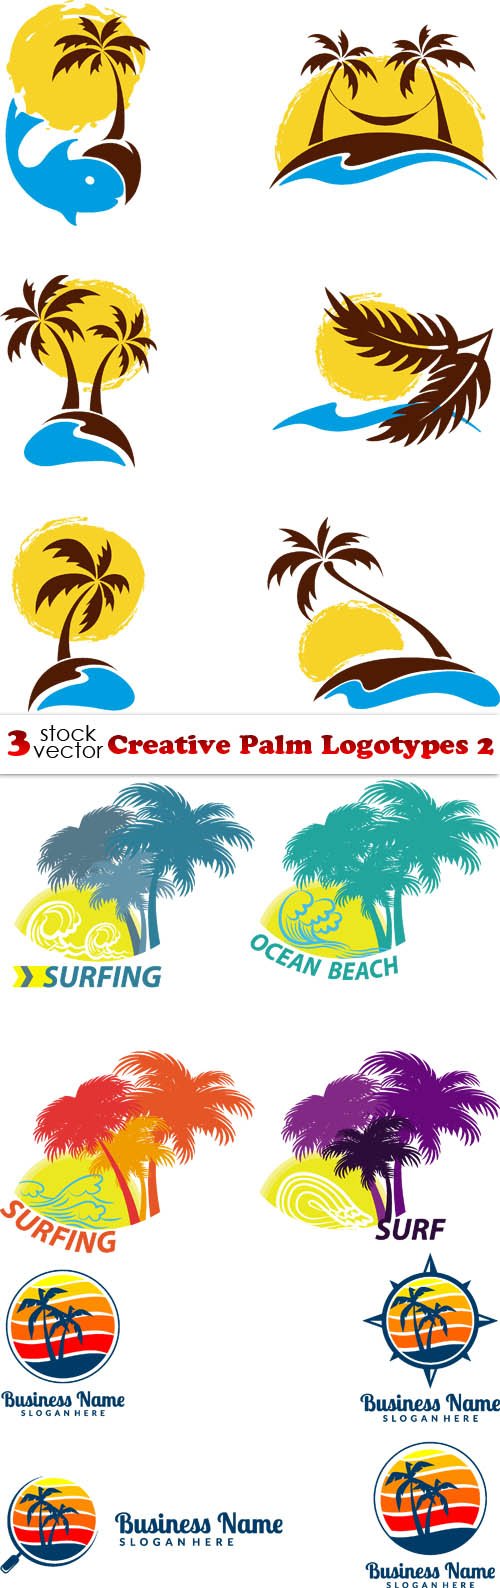 Vectors - Creative Palm Logotypes 2